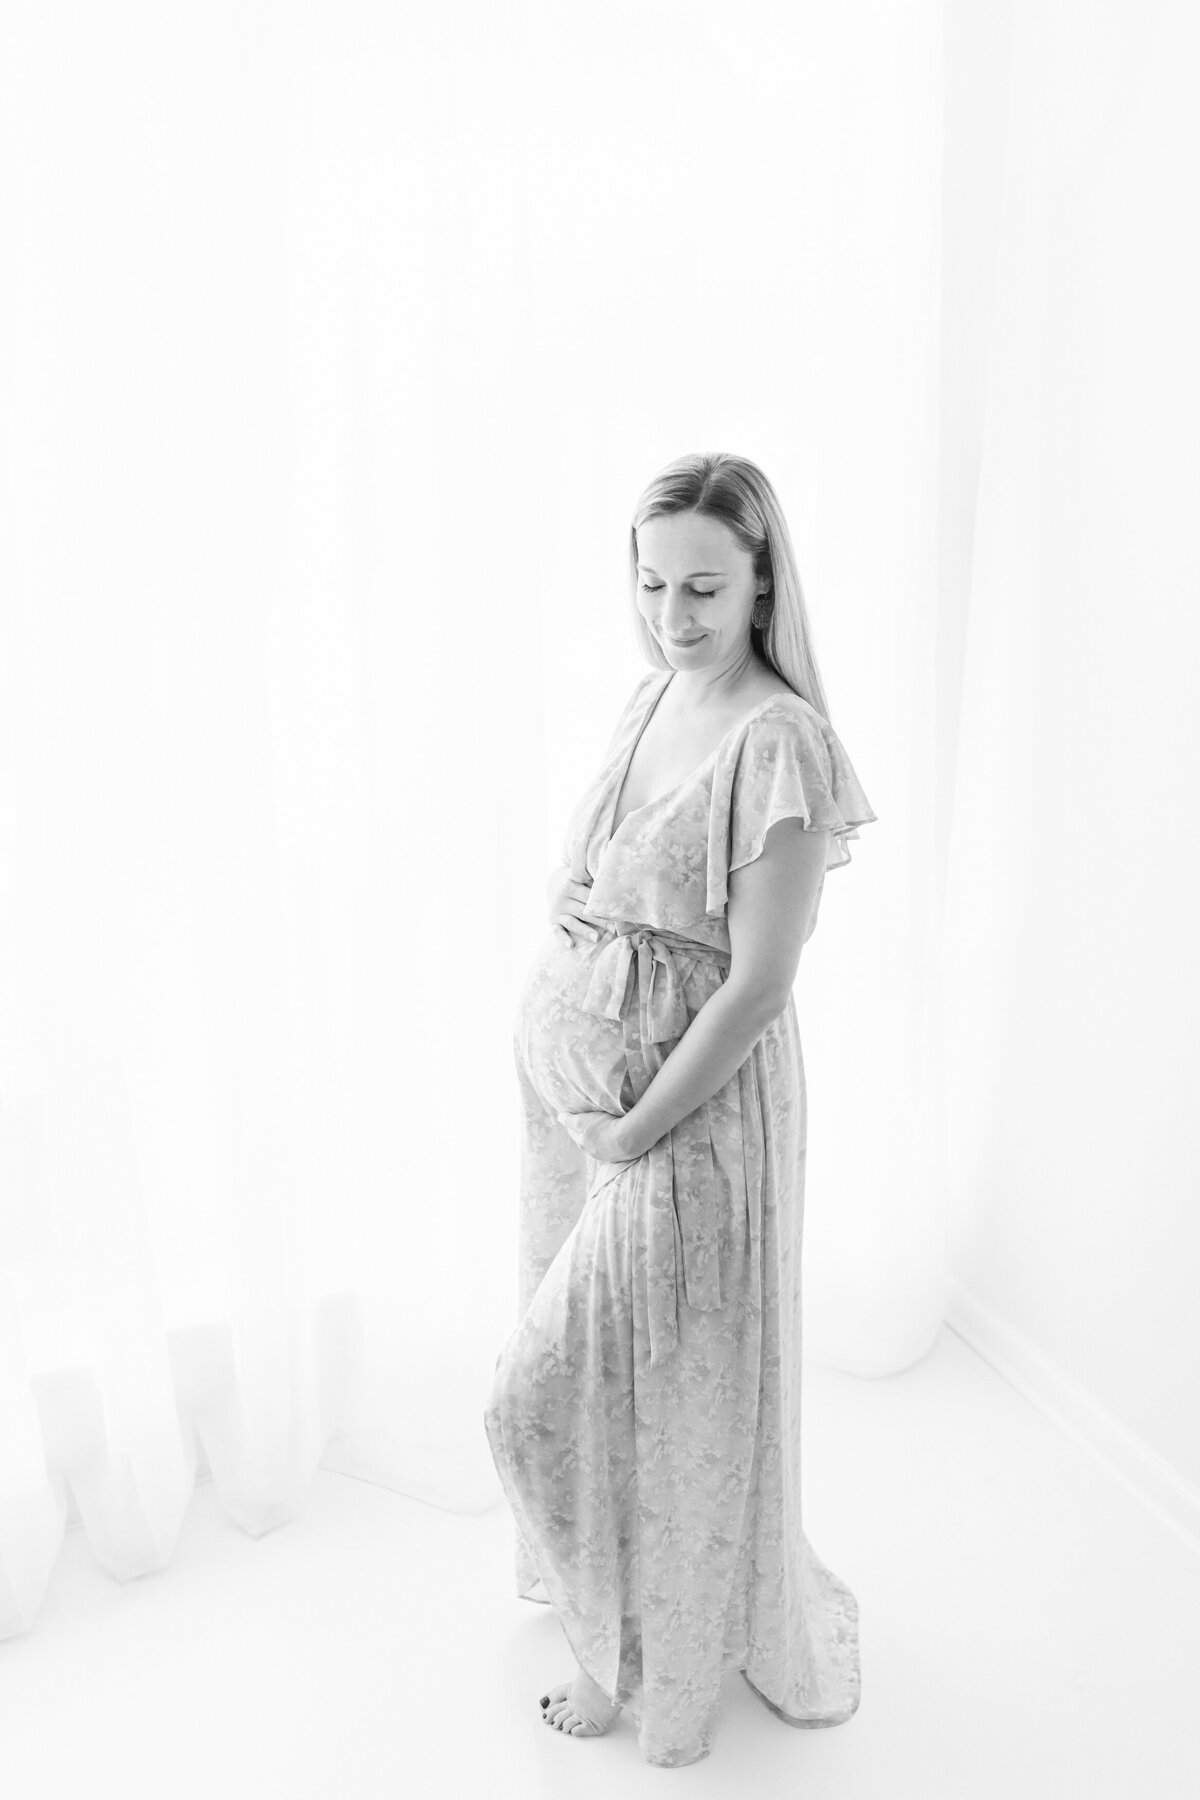 jacksonville-maternity-photographer-3